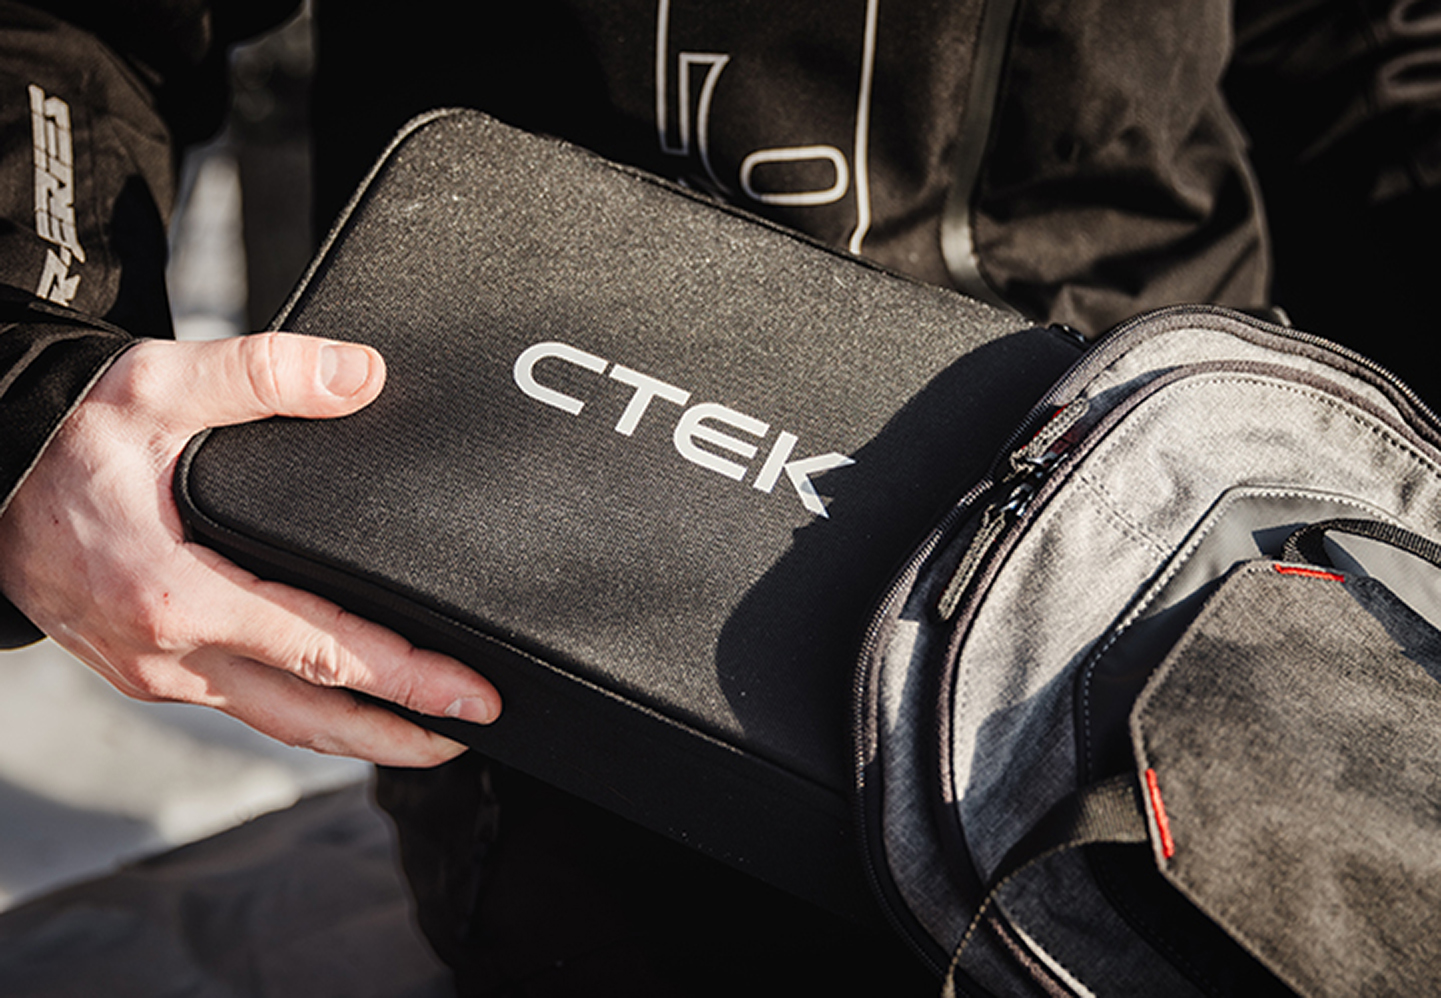 CTEK CS FREE Multifunktionales 4-in-1 tragbares Batterieladegerät 12V mit Adaptive Boost-Technologie, Artikelnr. 40-462 - ctek.com